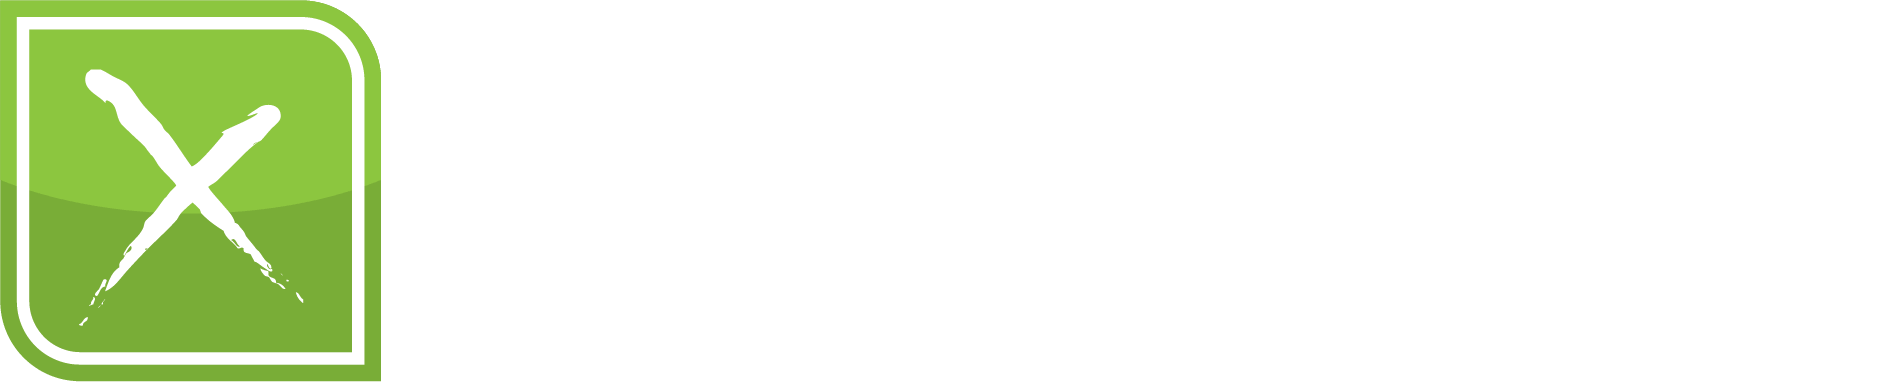 Xavier Maassen Logo